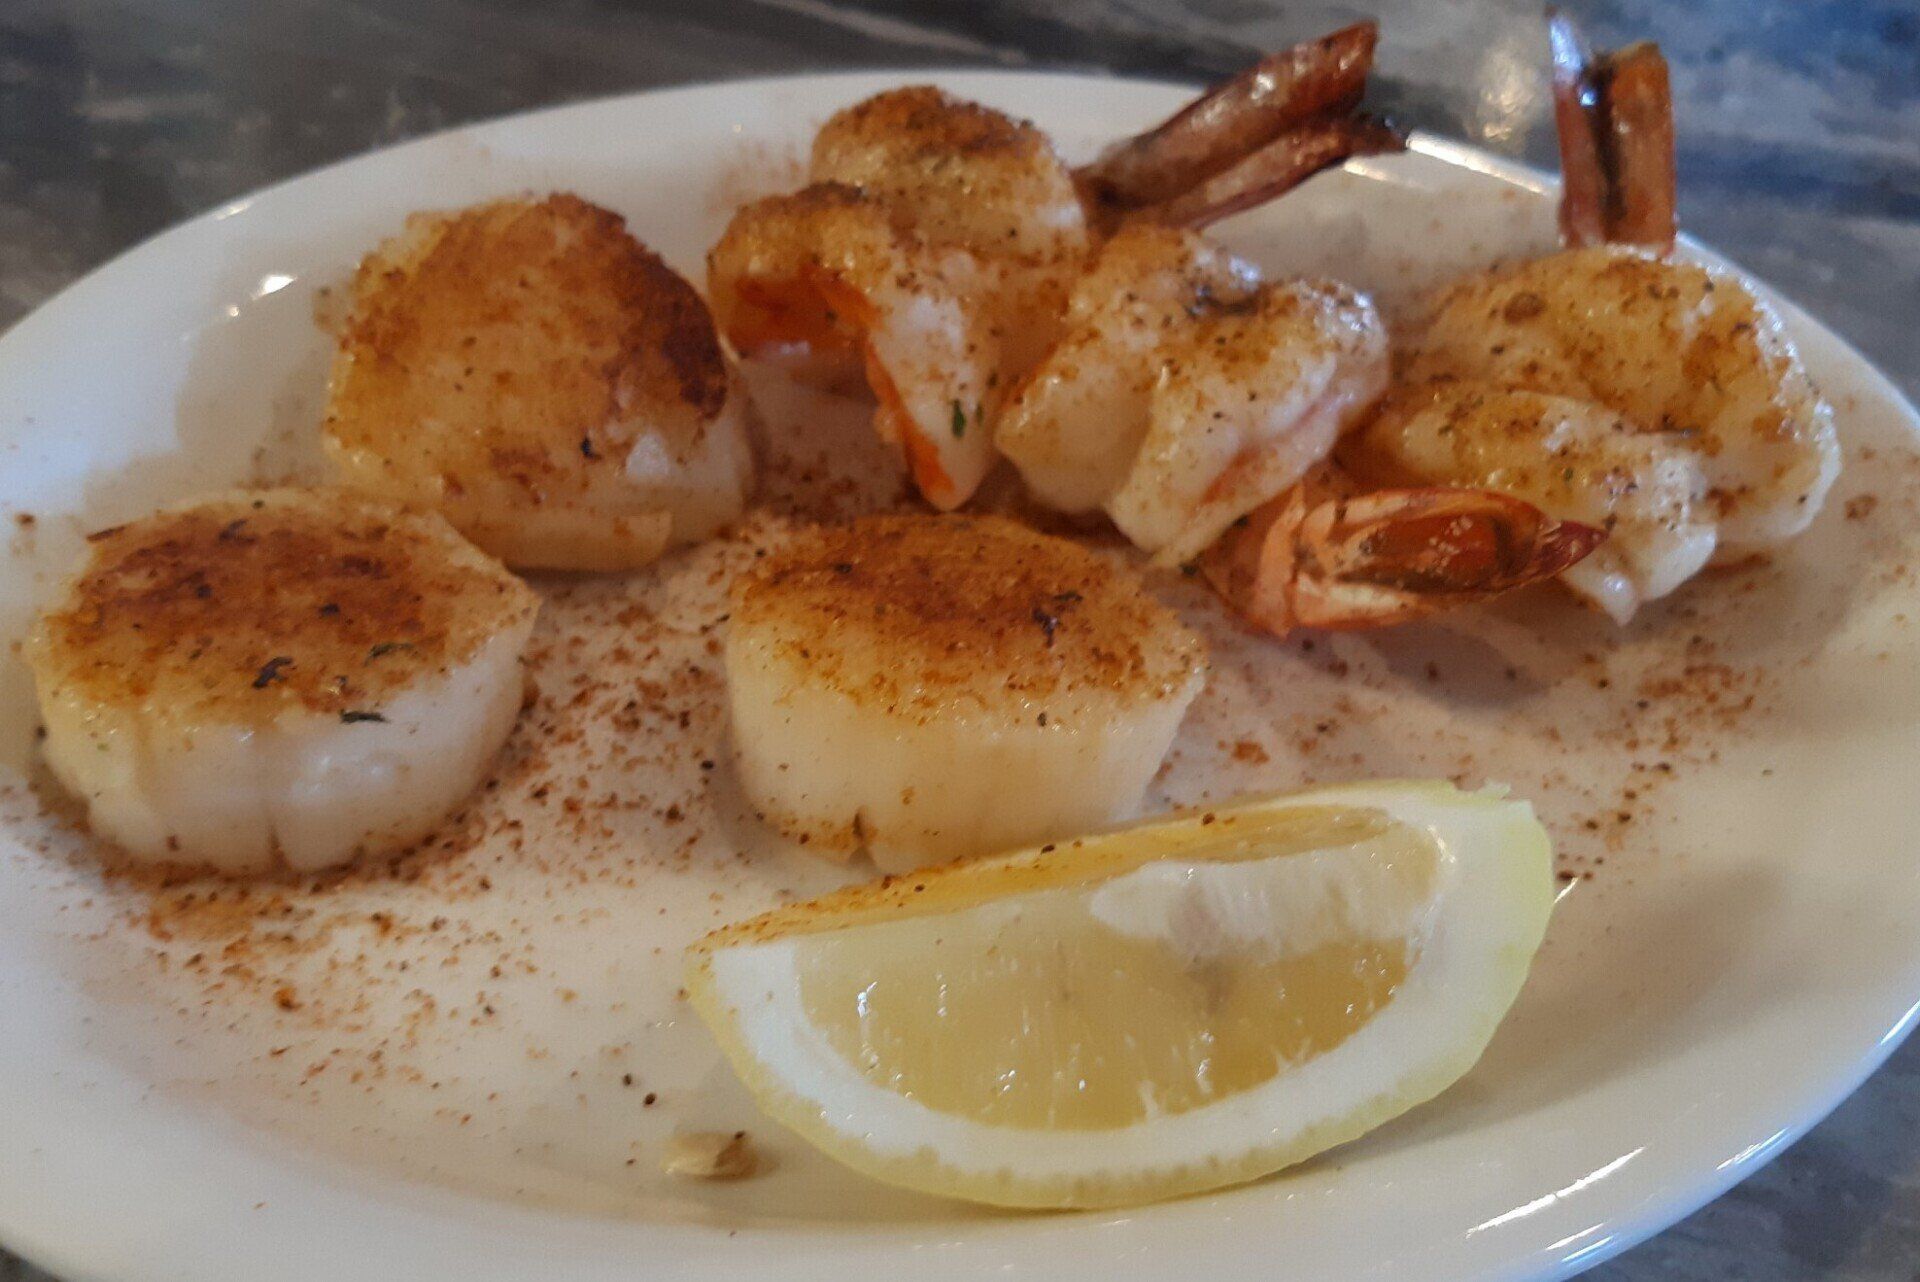 Shrimp and scallops